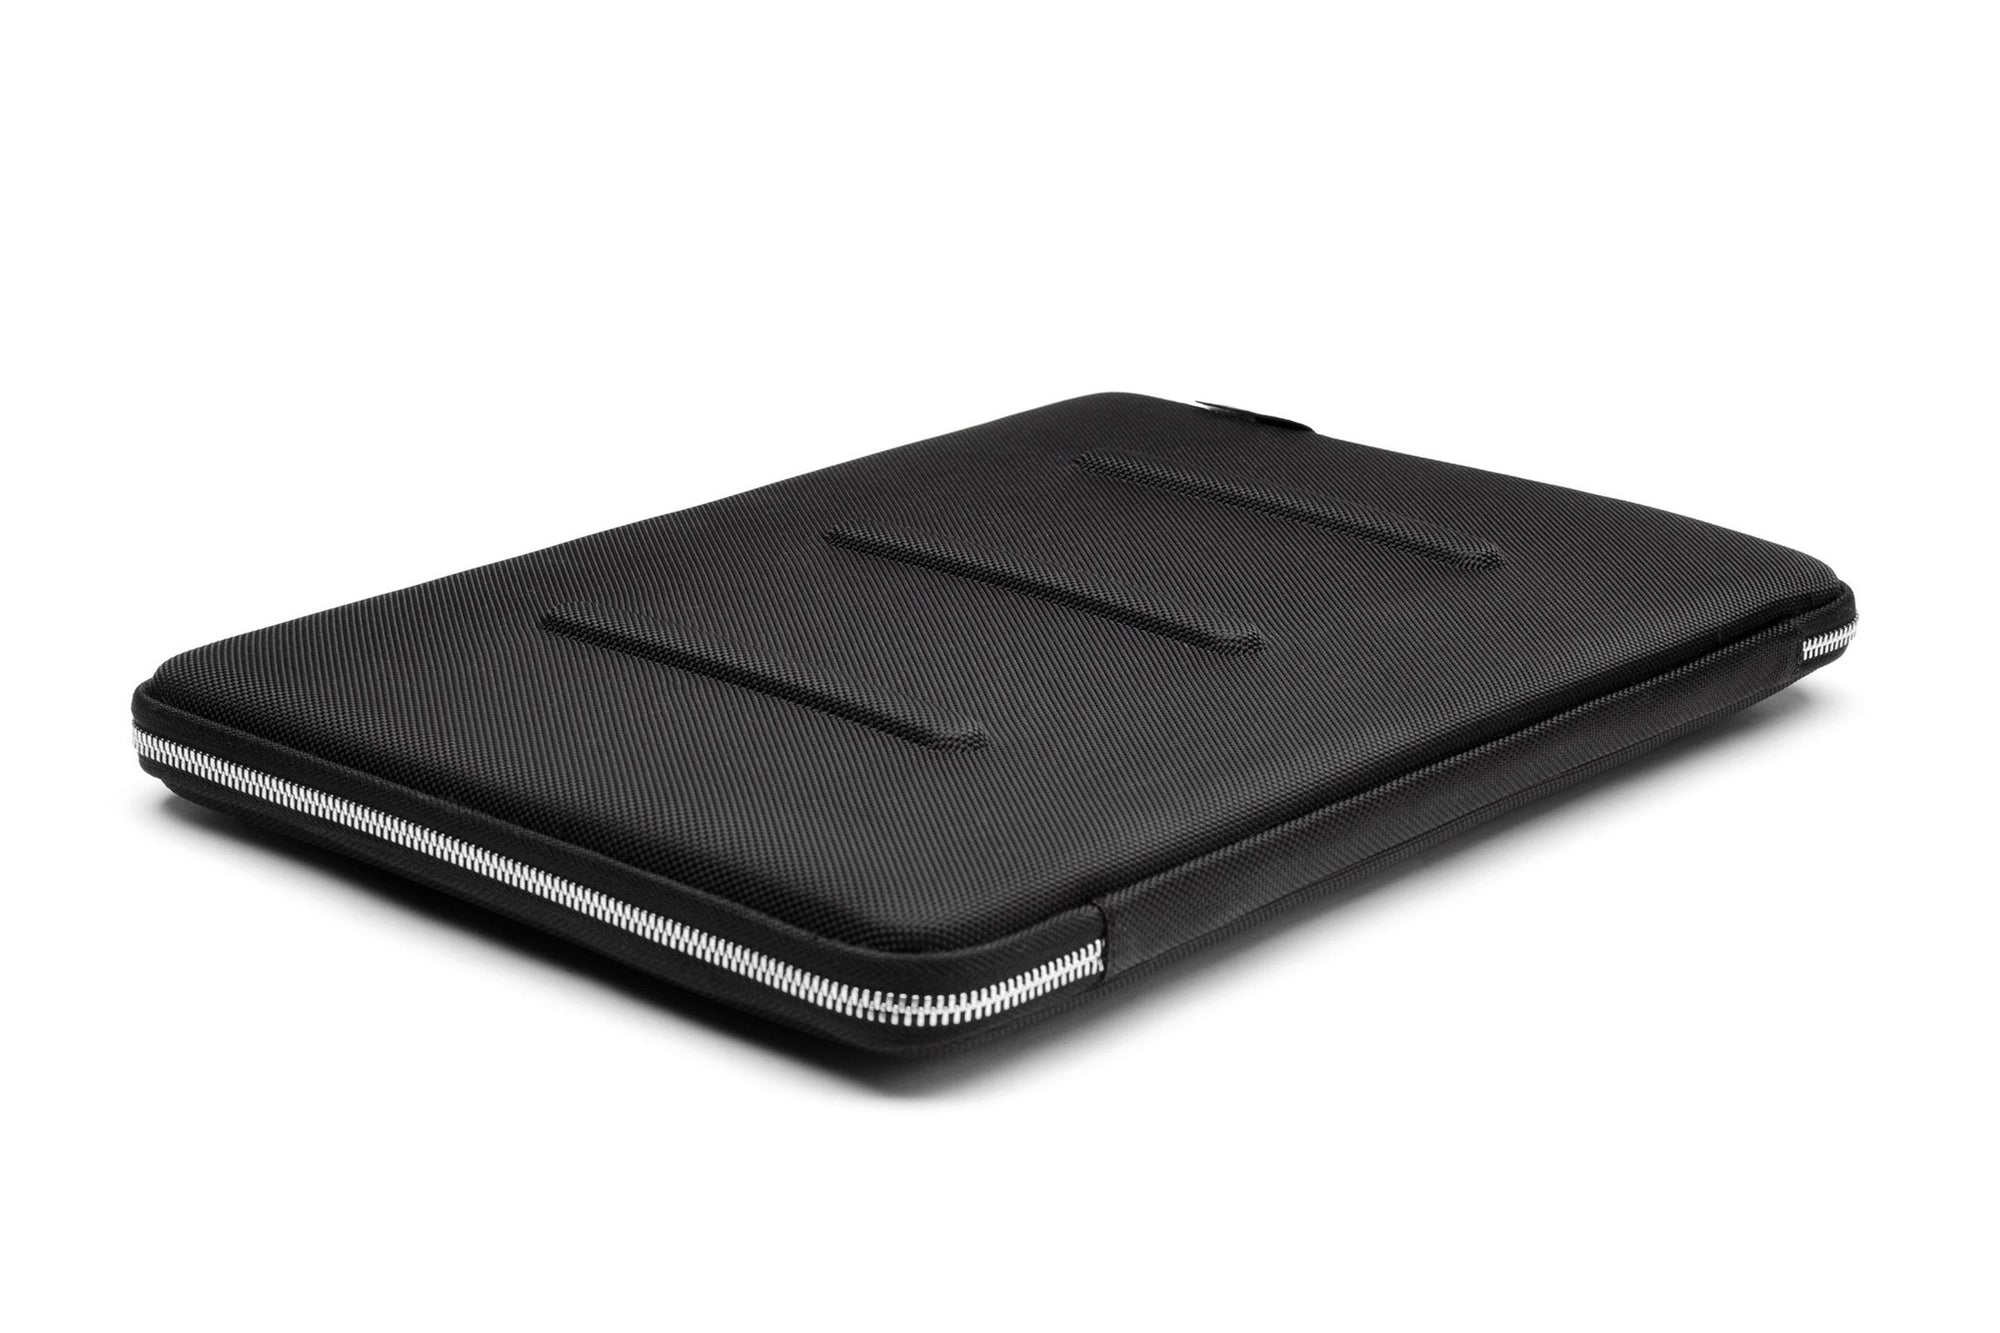 MacBook Pro Case  Modern, Rugged Design plus Work-in Functionality -  booqbags